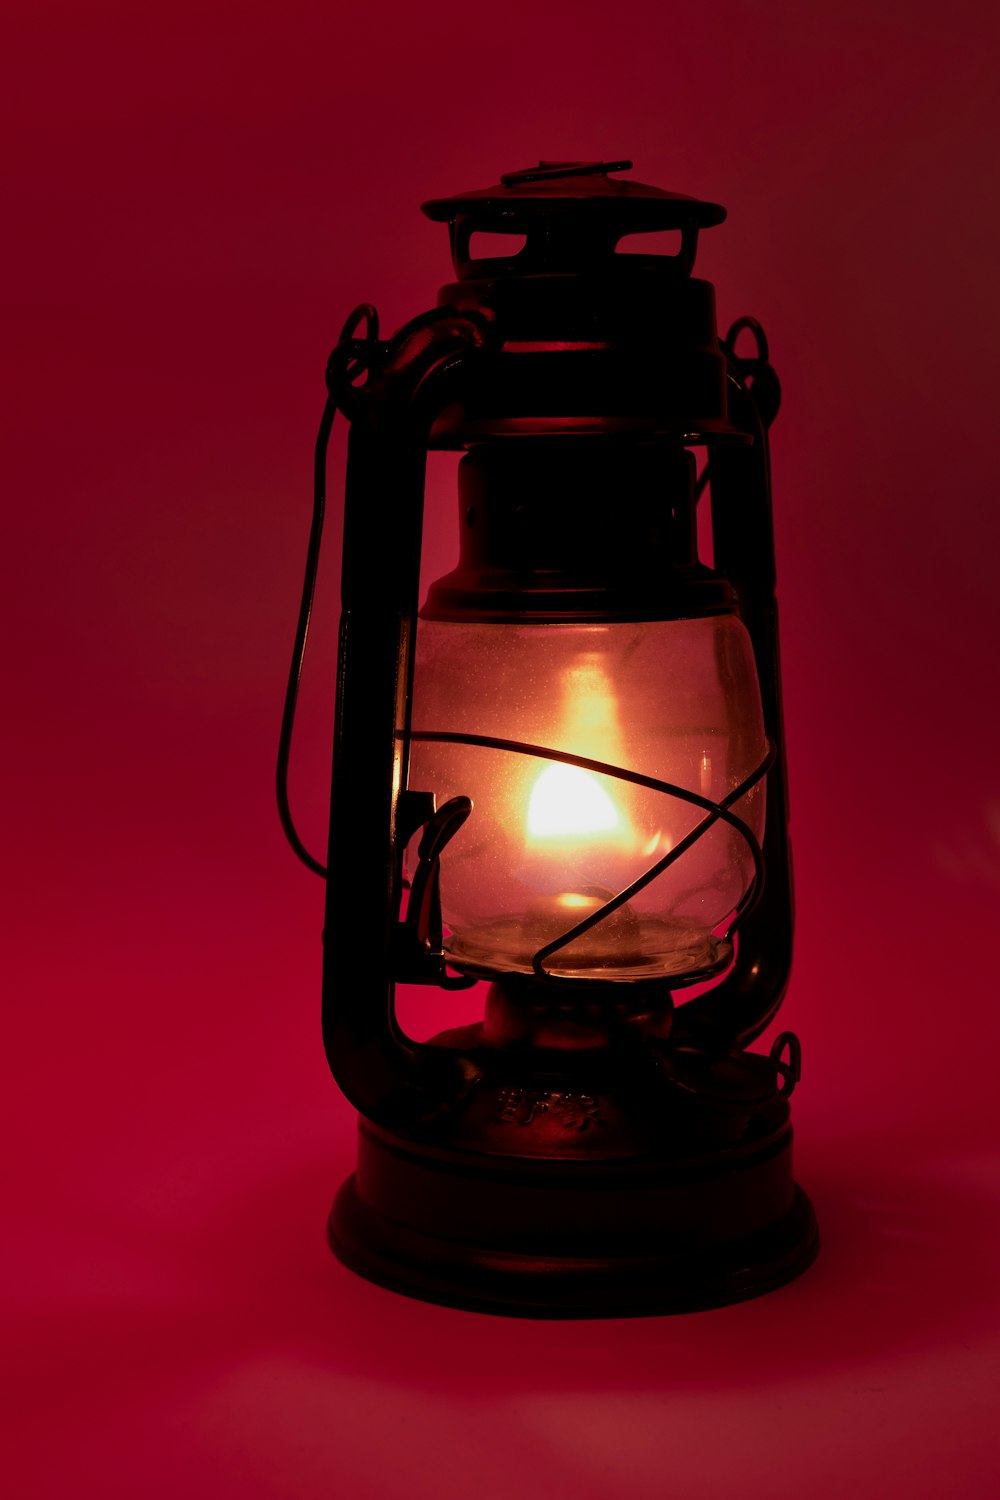 Lampada lanterna nera accesa in camera rossa